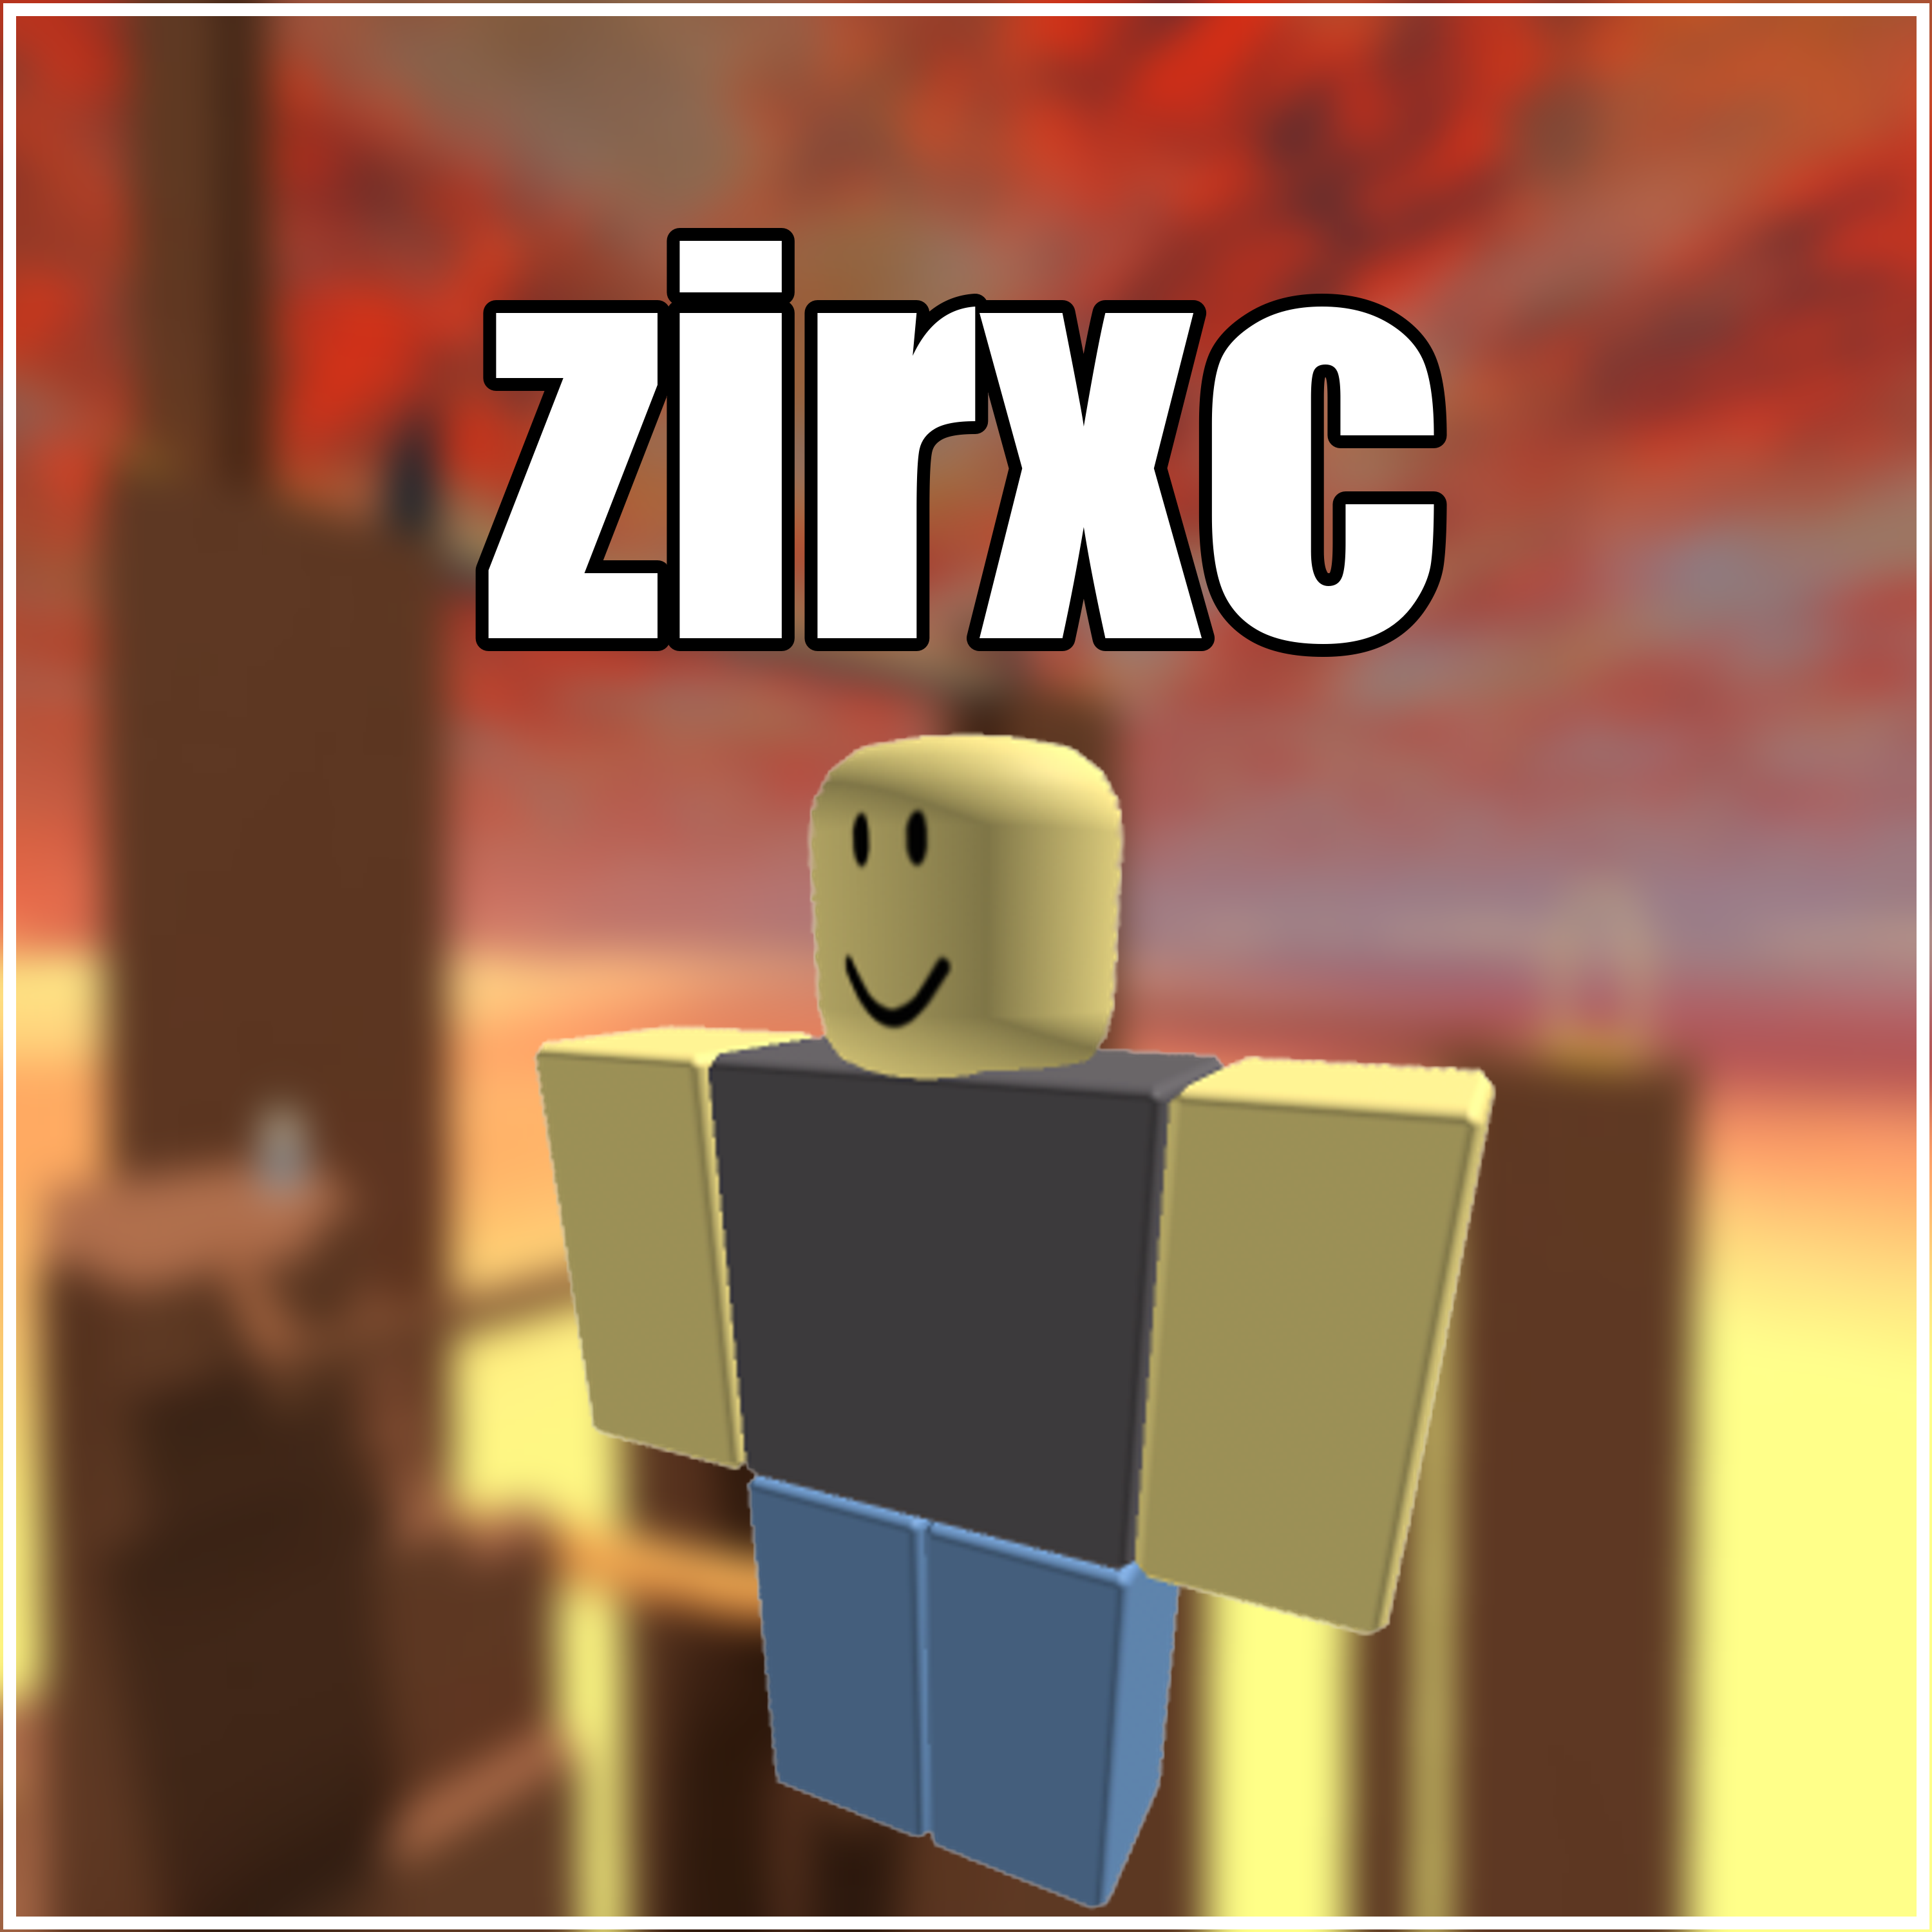 robruh RARE username "zirxc" ROBLOX account guaranteed to be unverified!